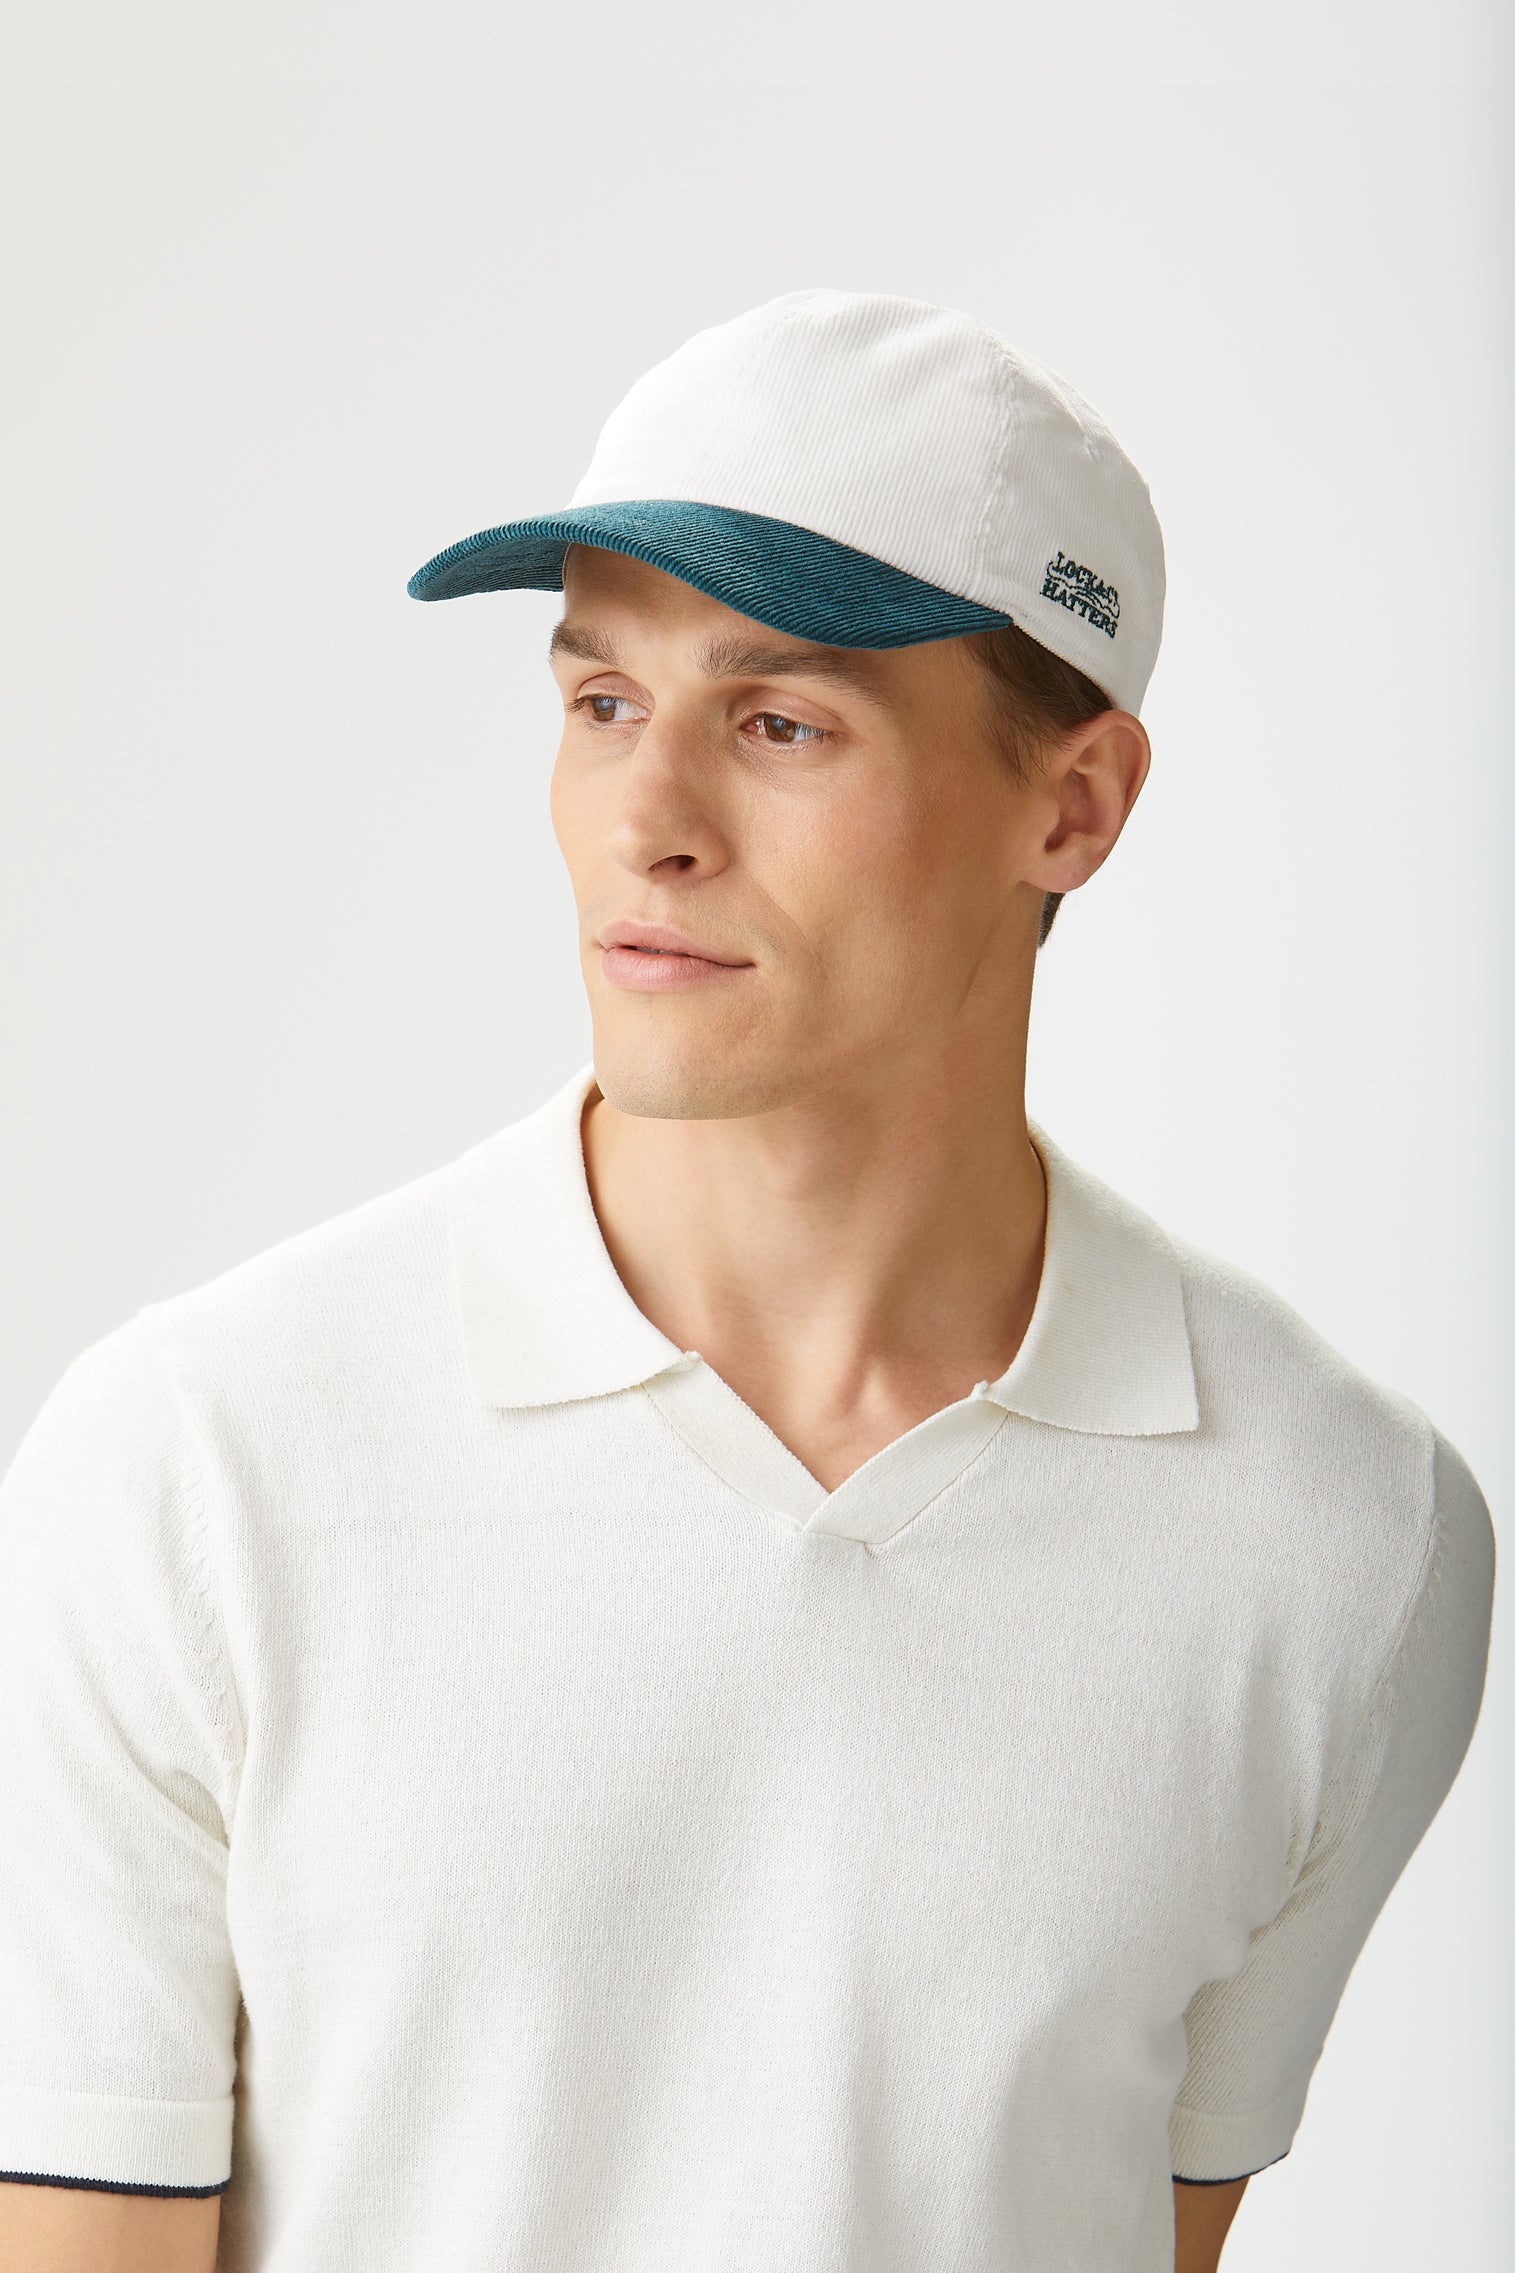 Adjustable Two-Tone Cord Baseball Cap - New Season Hat Collection - Lock & Co. Hatters London UK